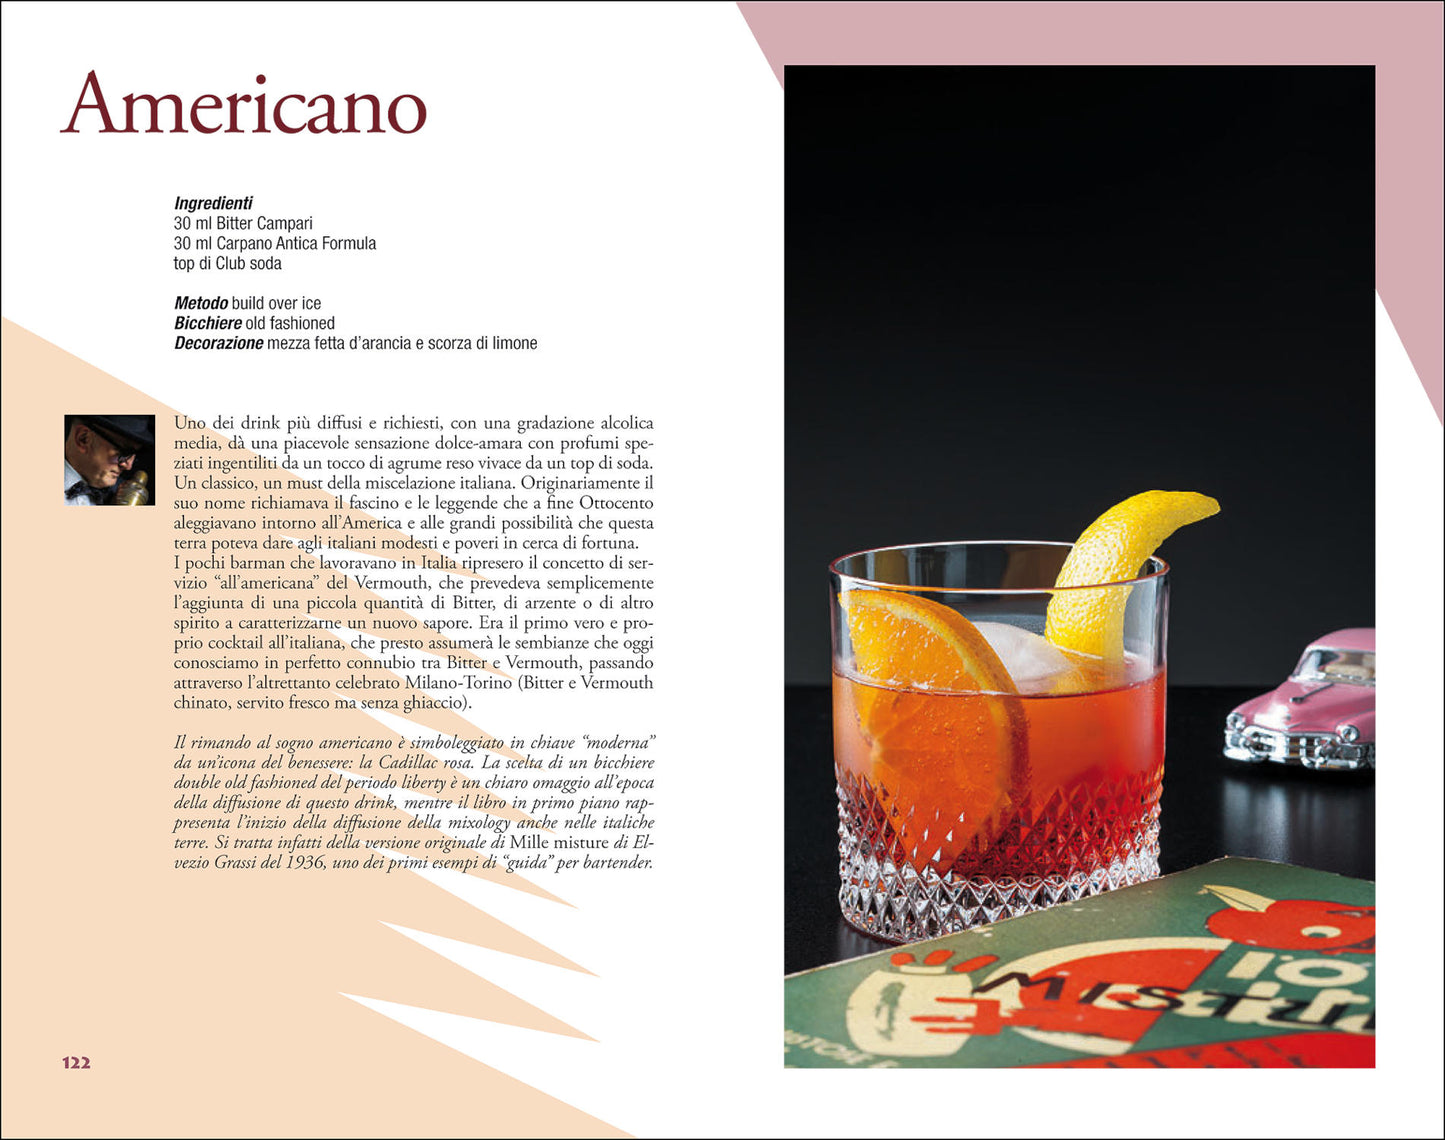 Negroni cocktail. Una leggenda italiana